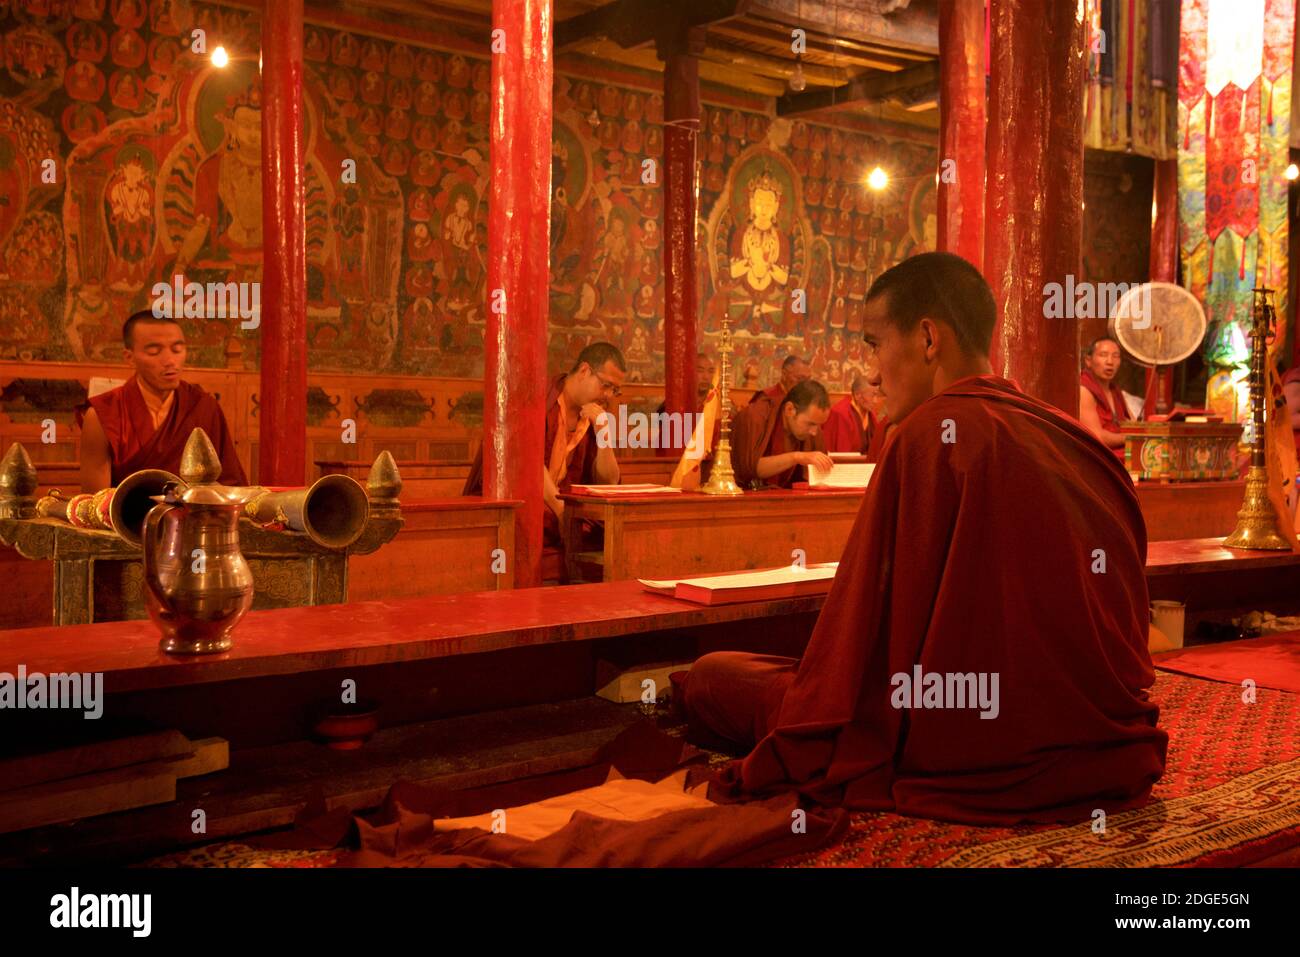 Prayer hall with monks in session, Likir monastery, Ladakh, Jammu and Kashmir, India Stock Photo